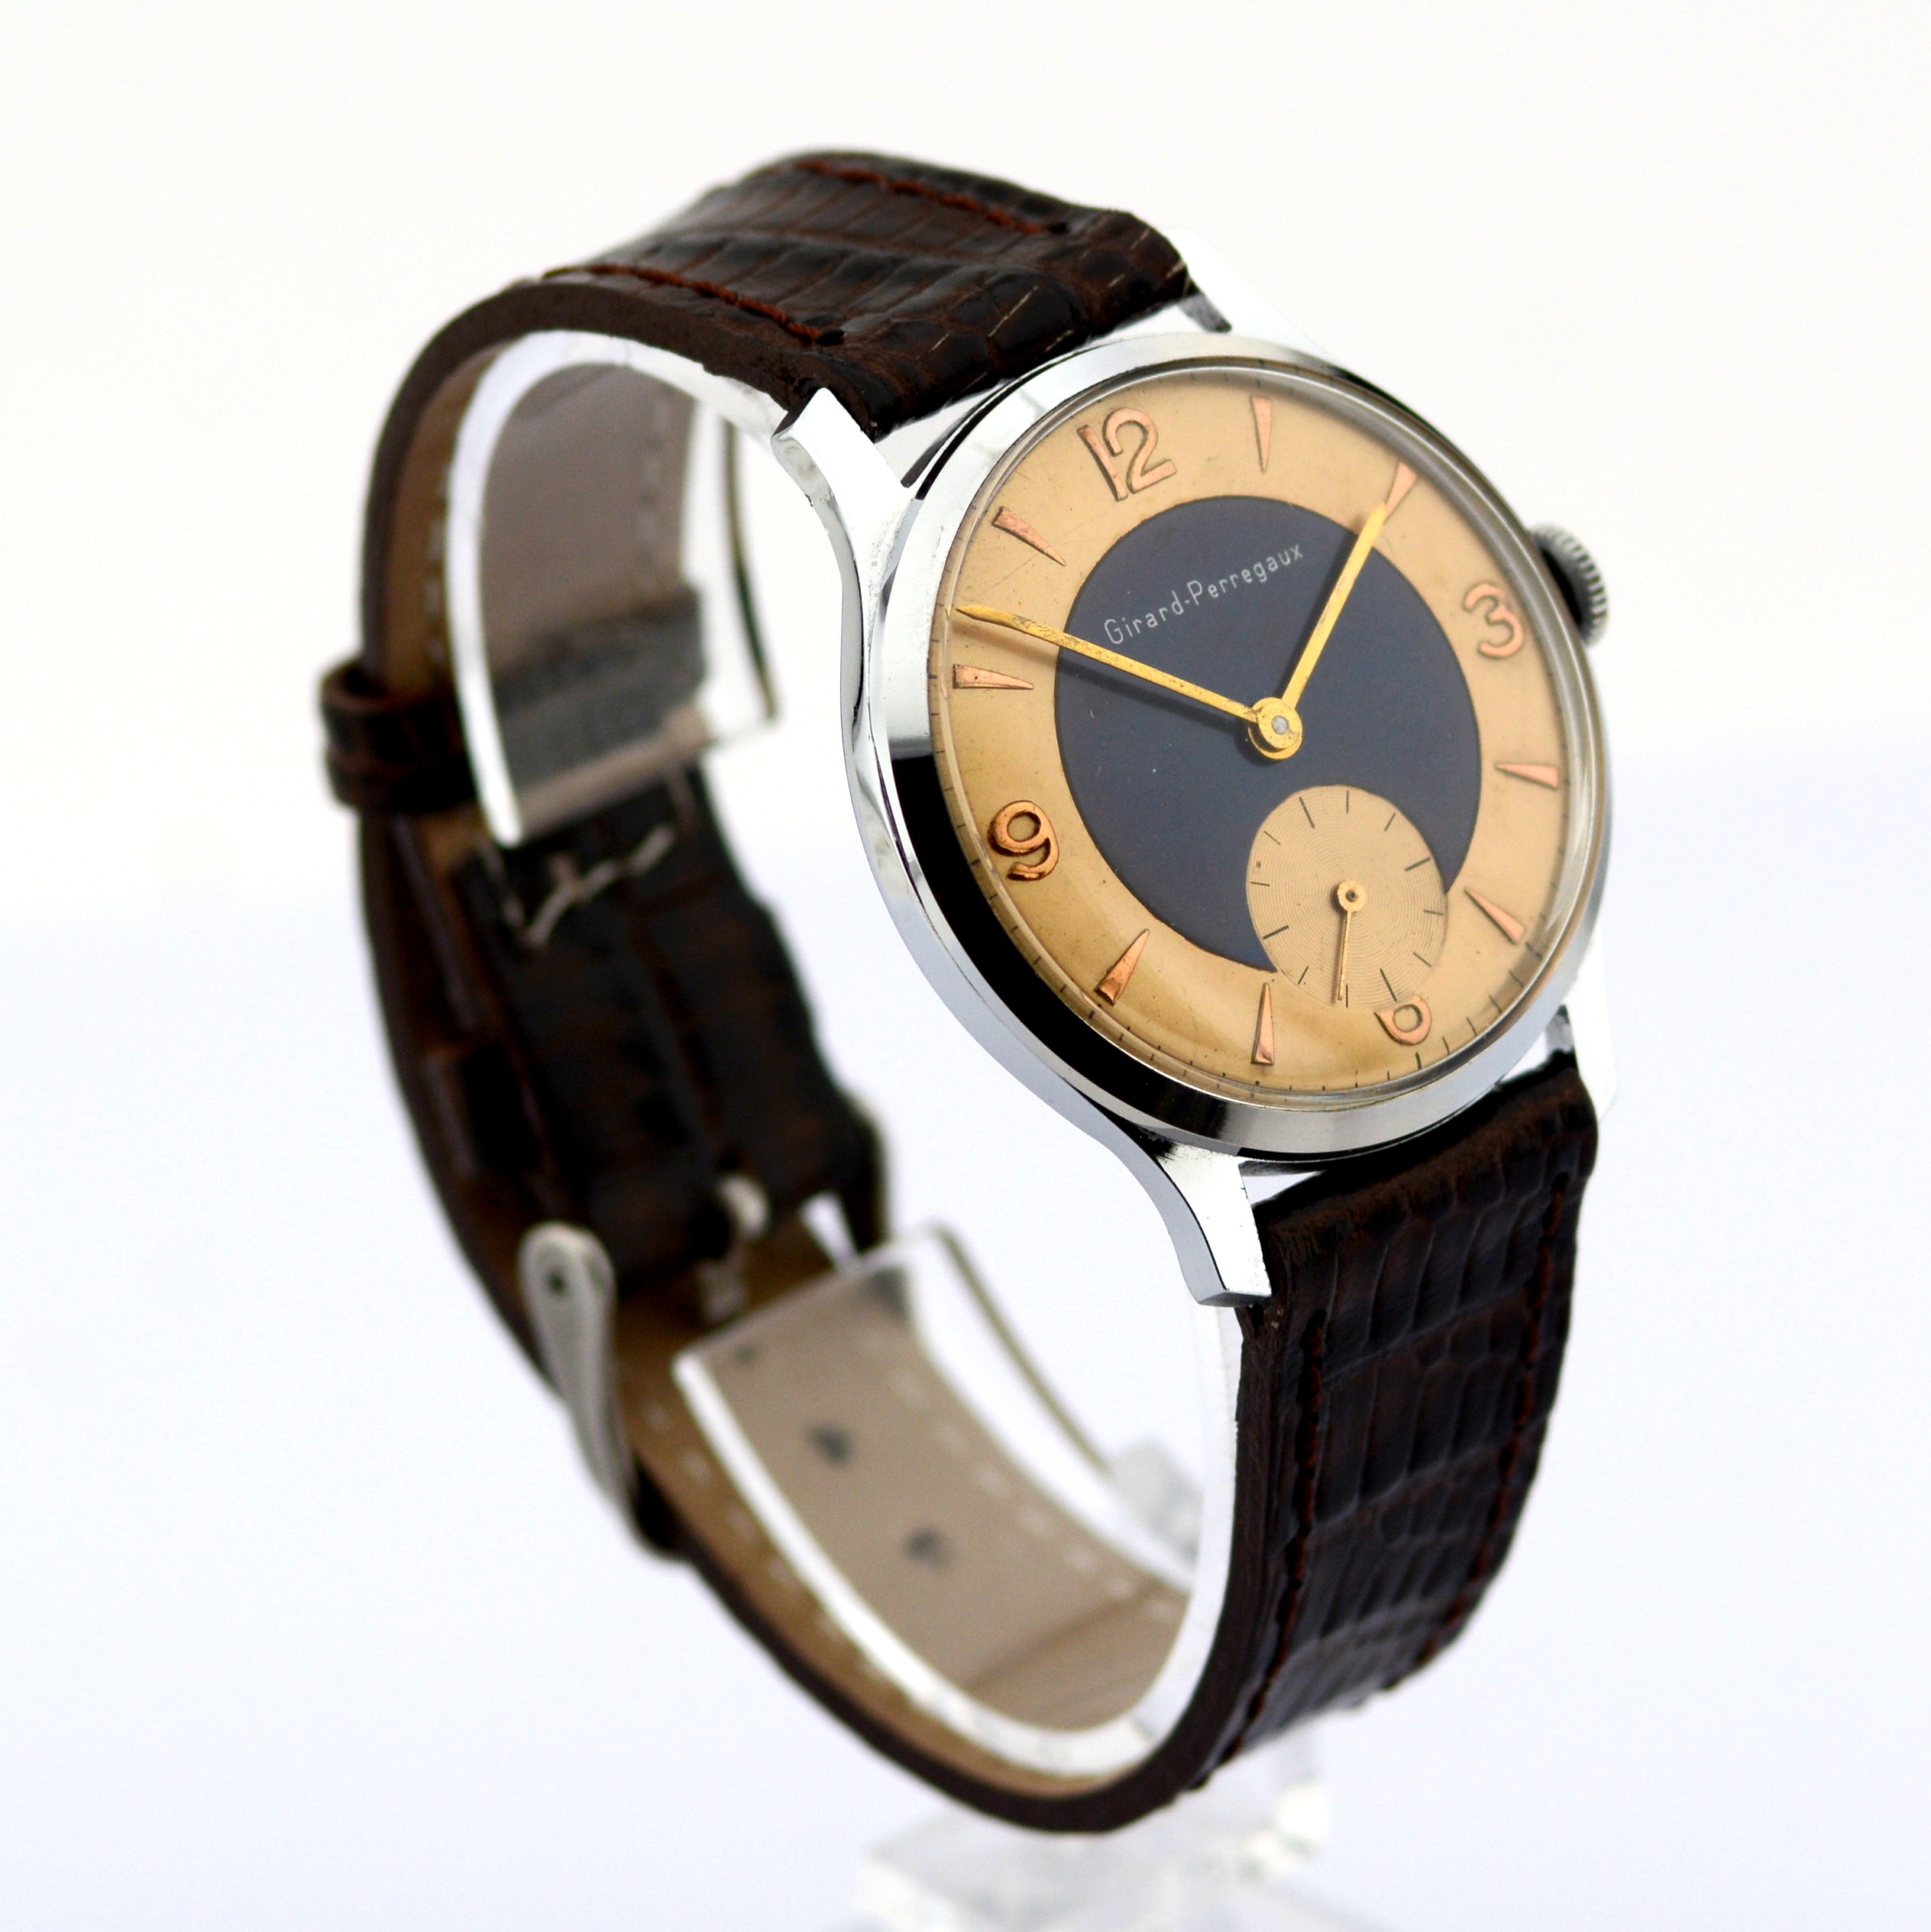 Girard-Perregaux / Vintage - Gentlmen's Steel Wrist Watch - Image 2 of 9